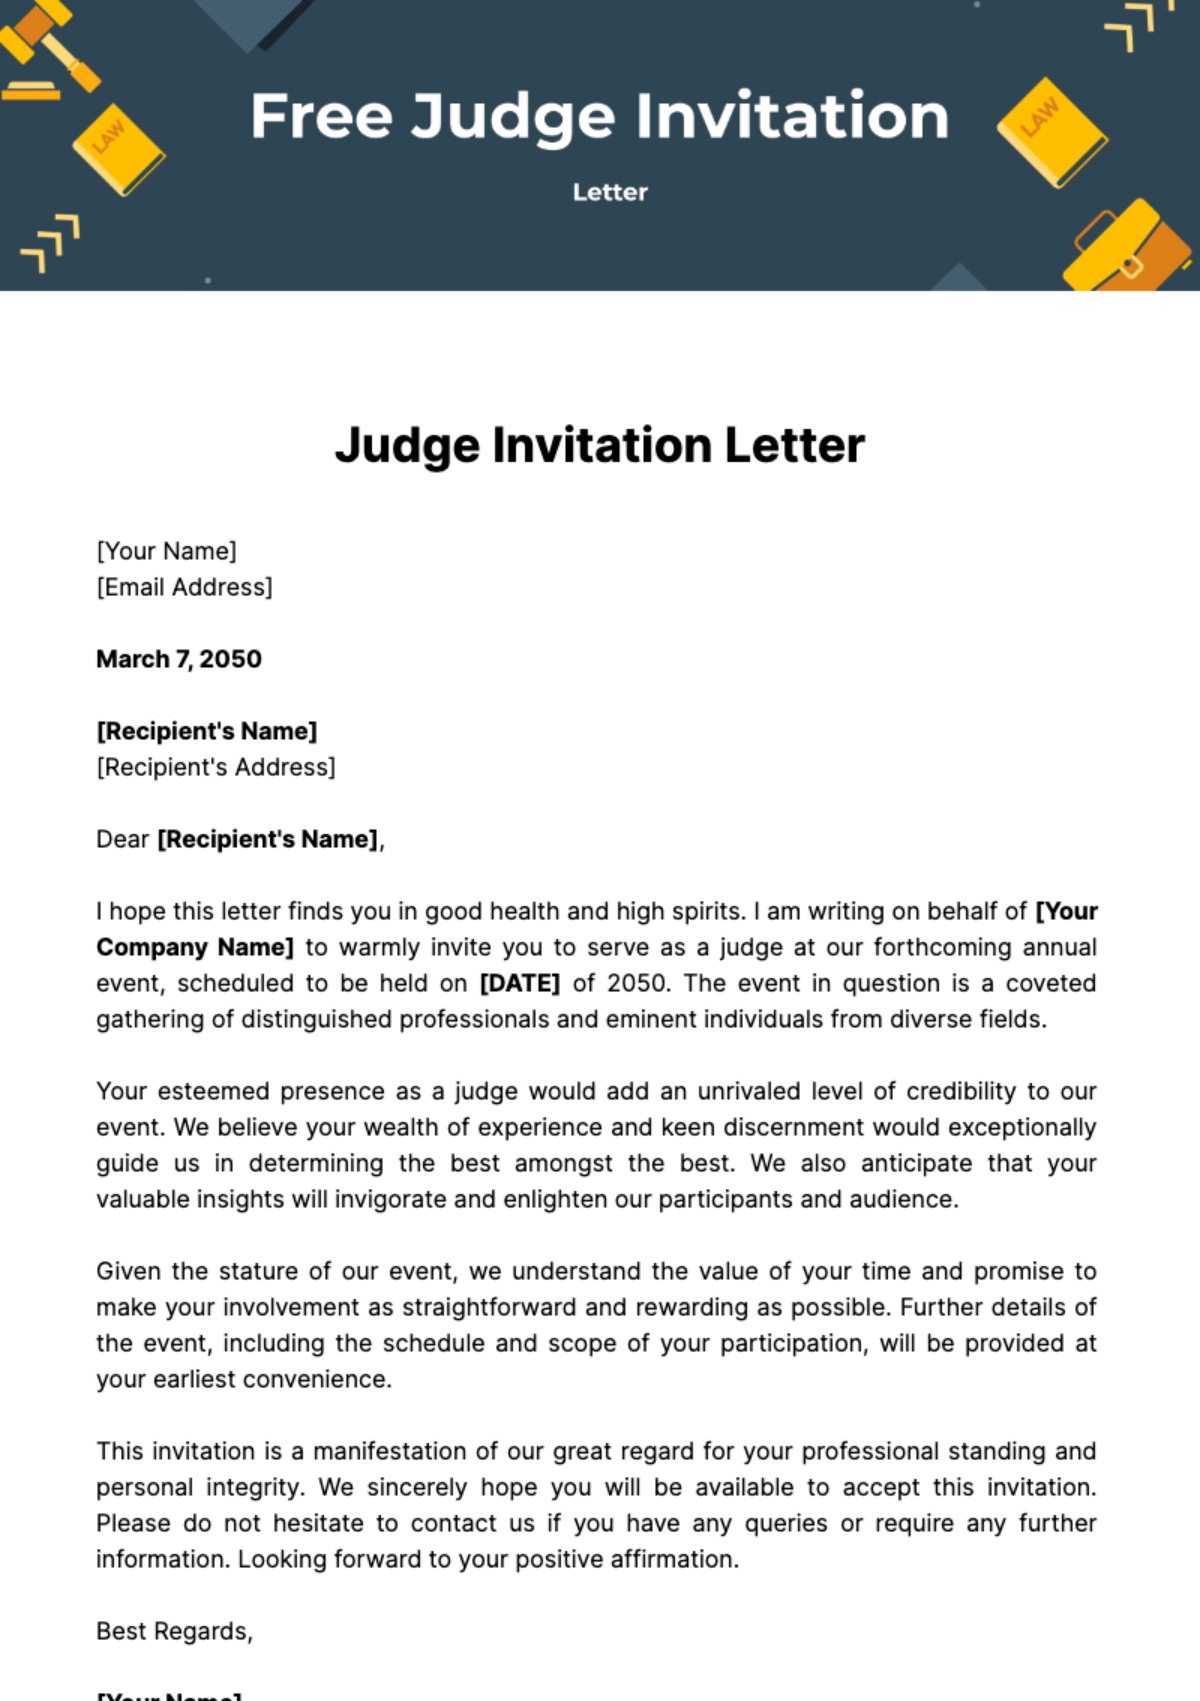 Free Judge Invitation Letter Template